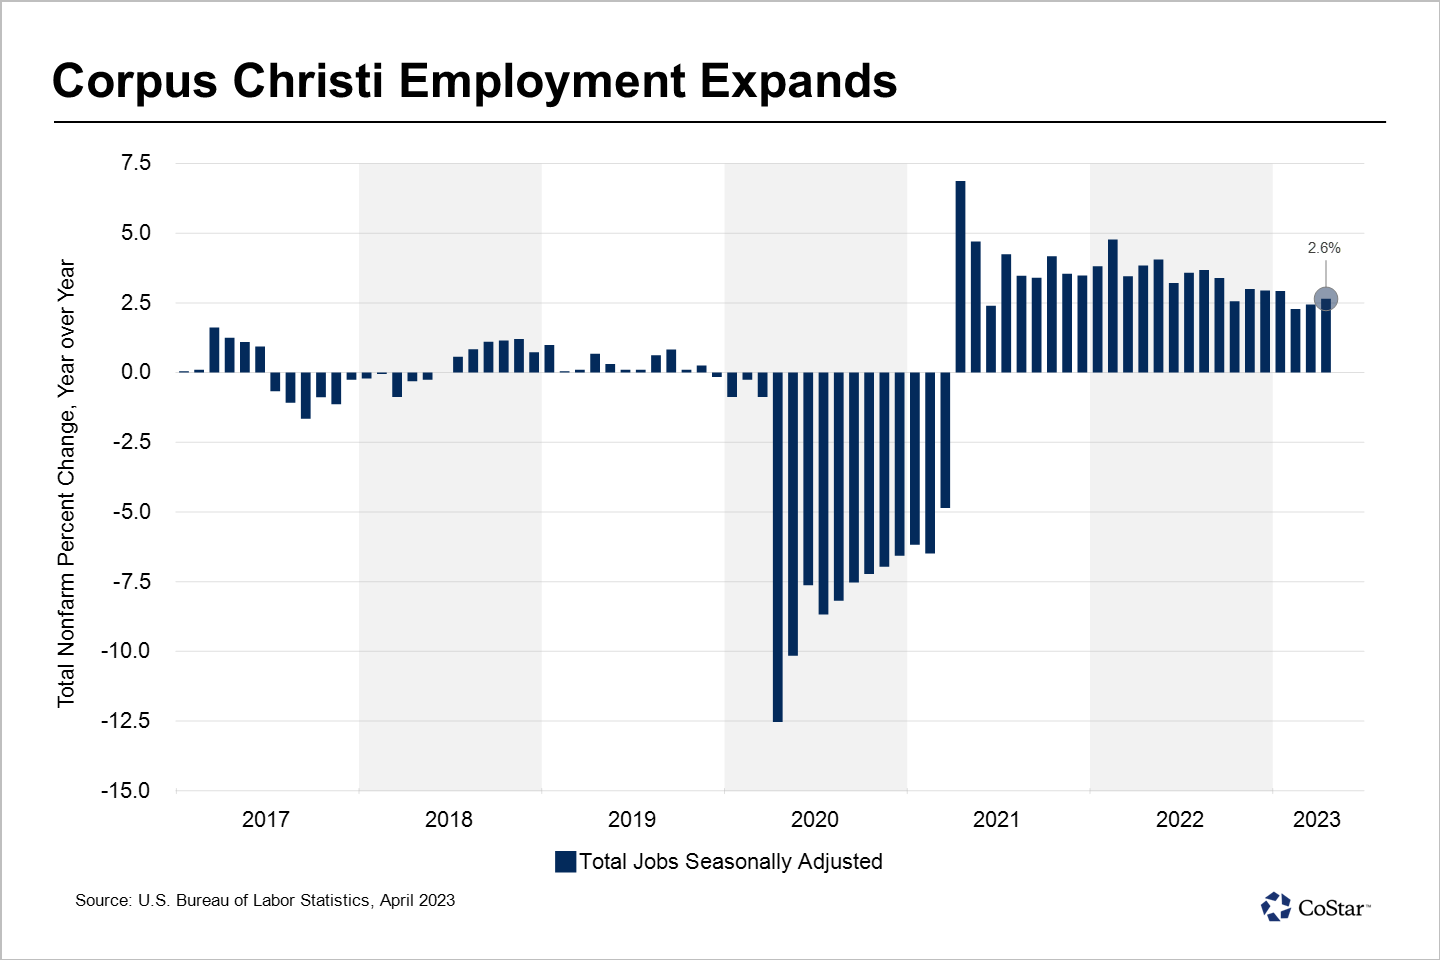 Corpus Christi Job Growth Remains Above Pre-Pandemic Levels